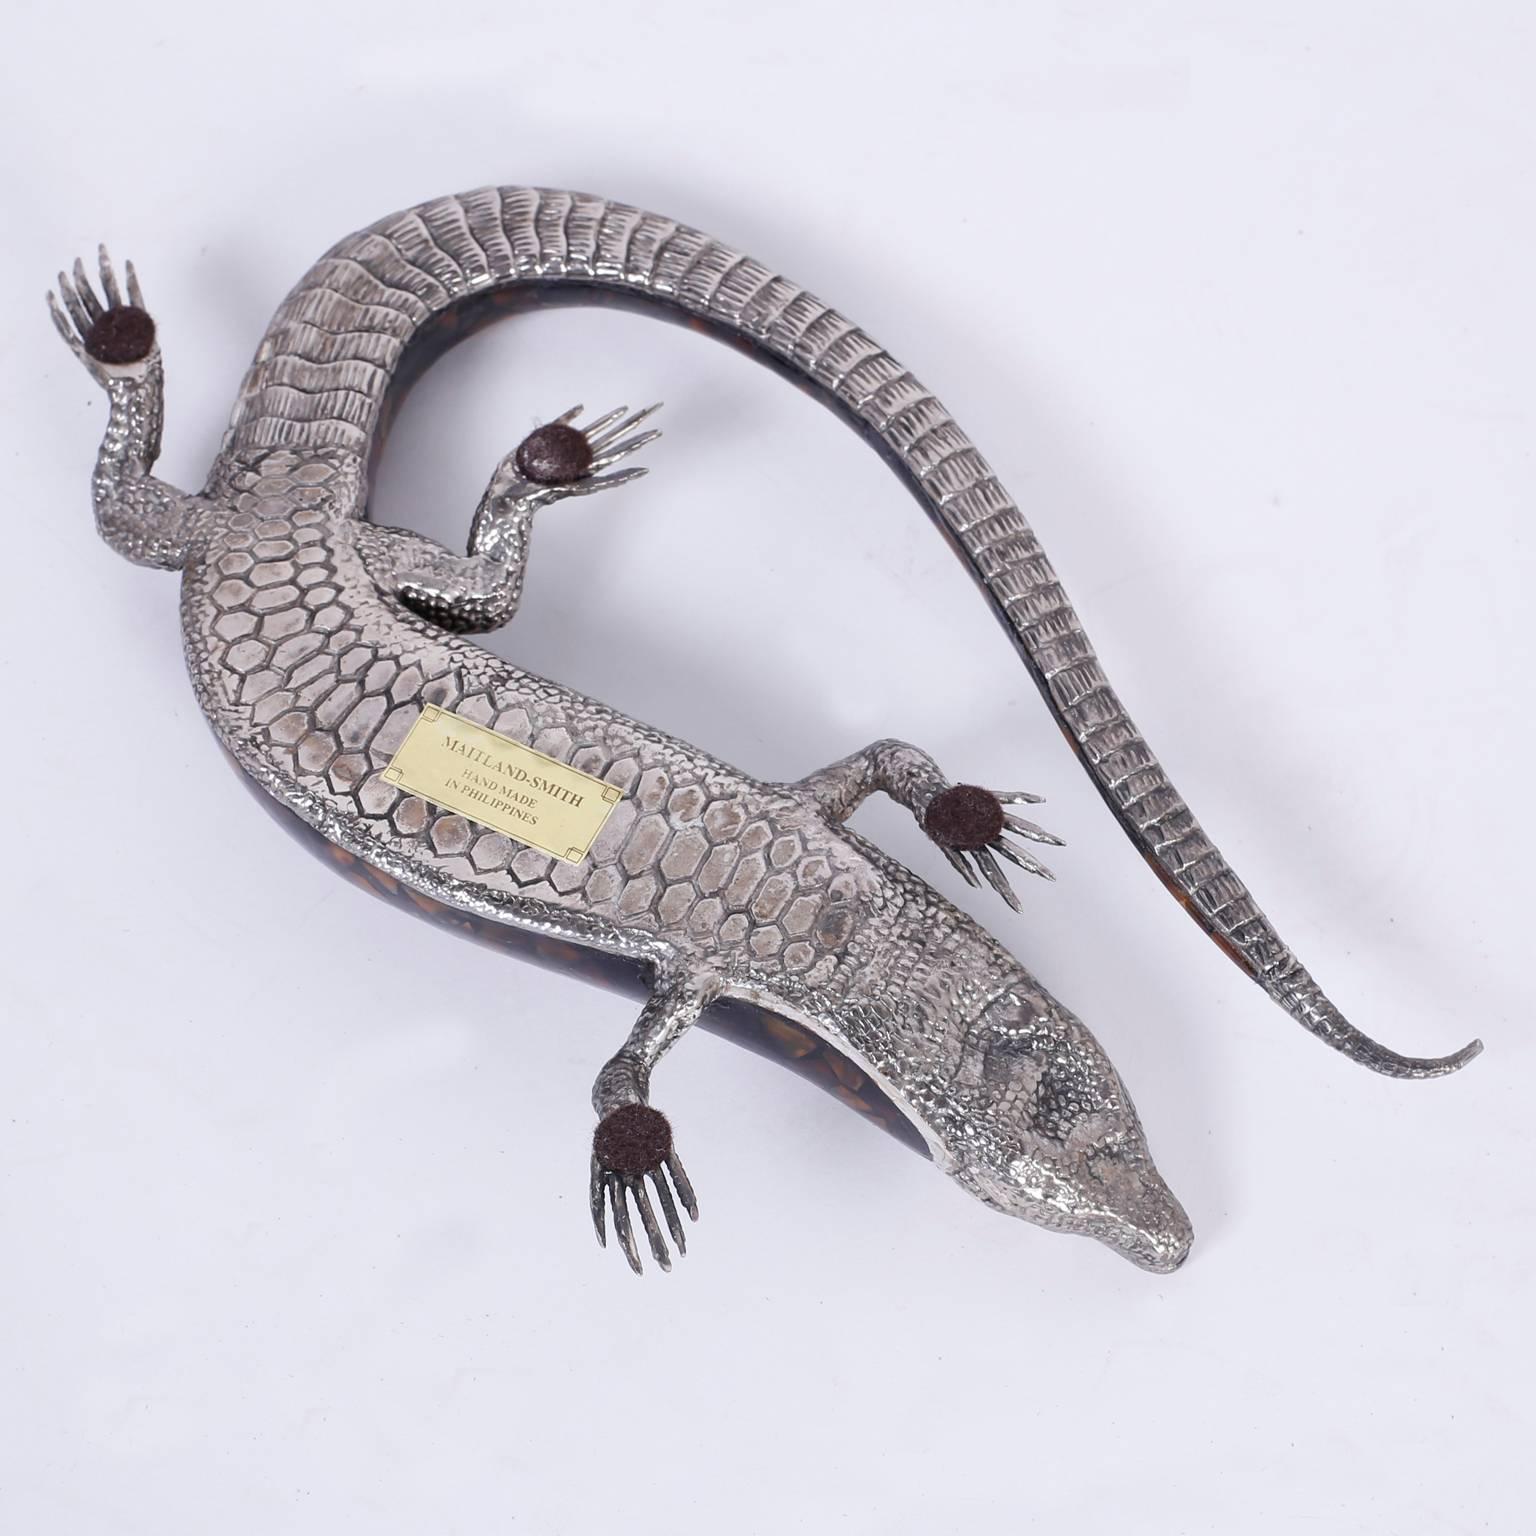 Contemporary Midcentury Lizard Sculpture